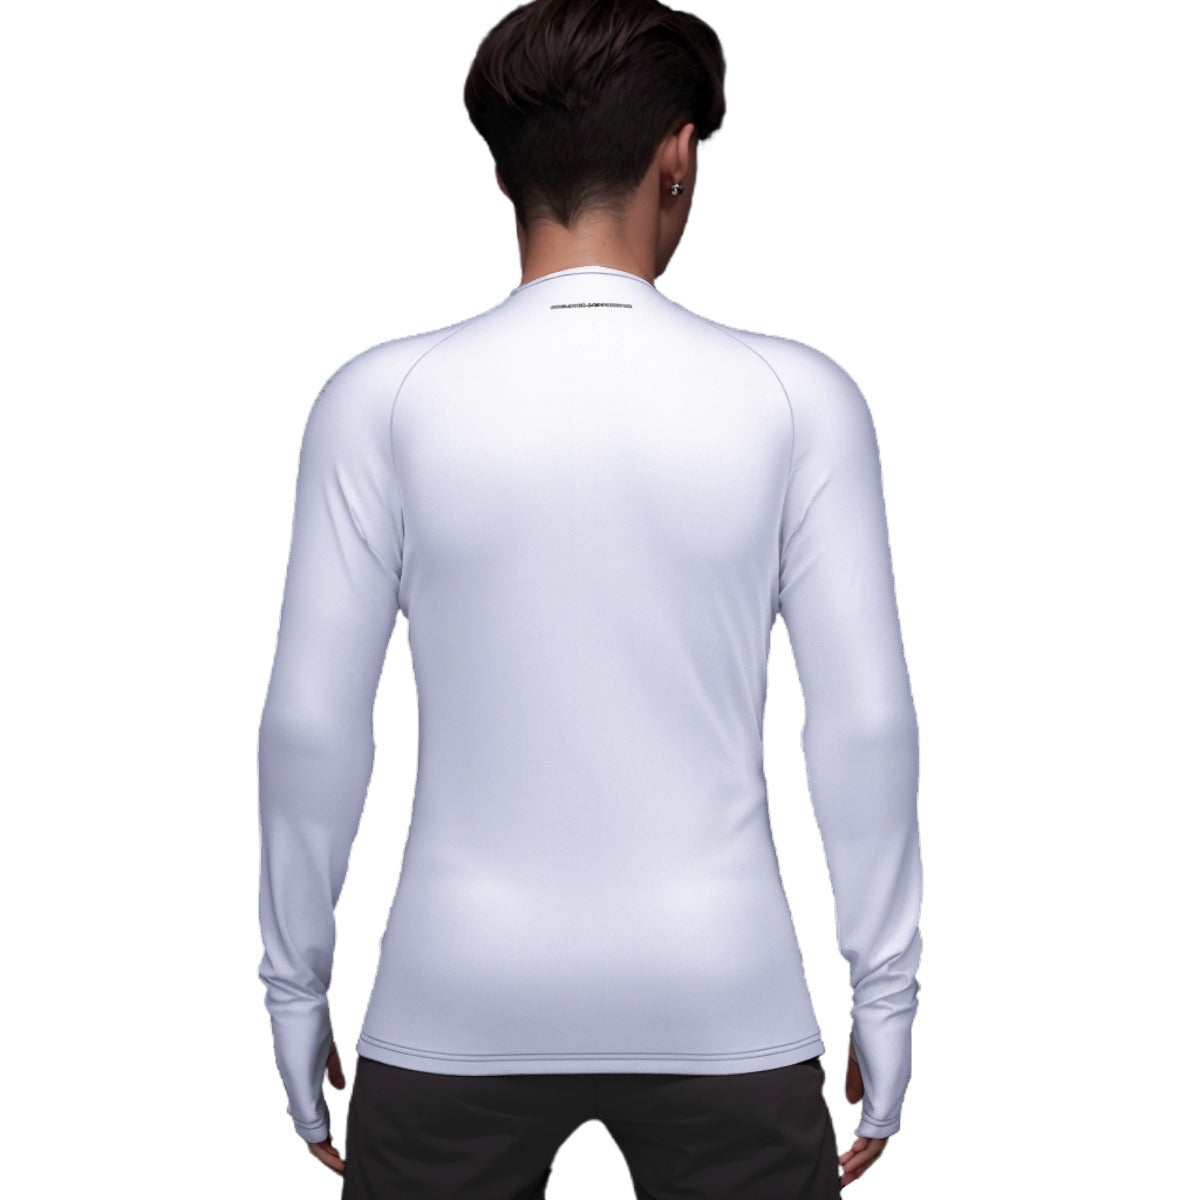 
                  
                    A.A. White BL Men's Raglan Sleeve Compression Sport Shirt
                  
                